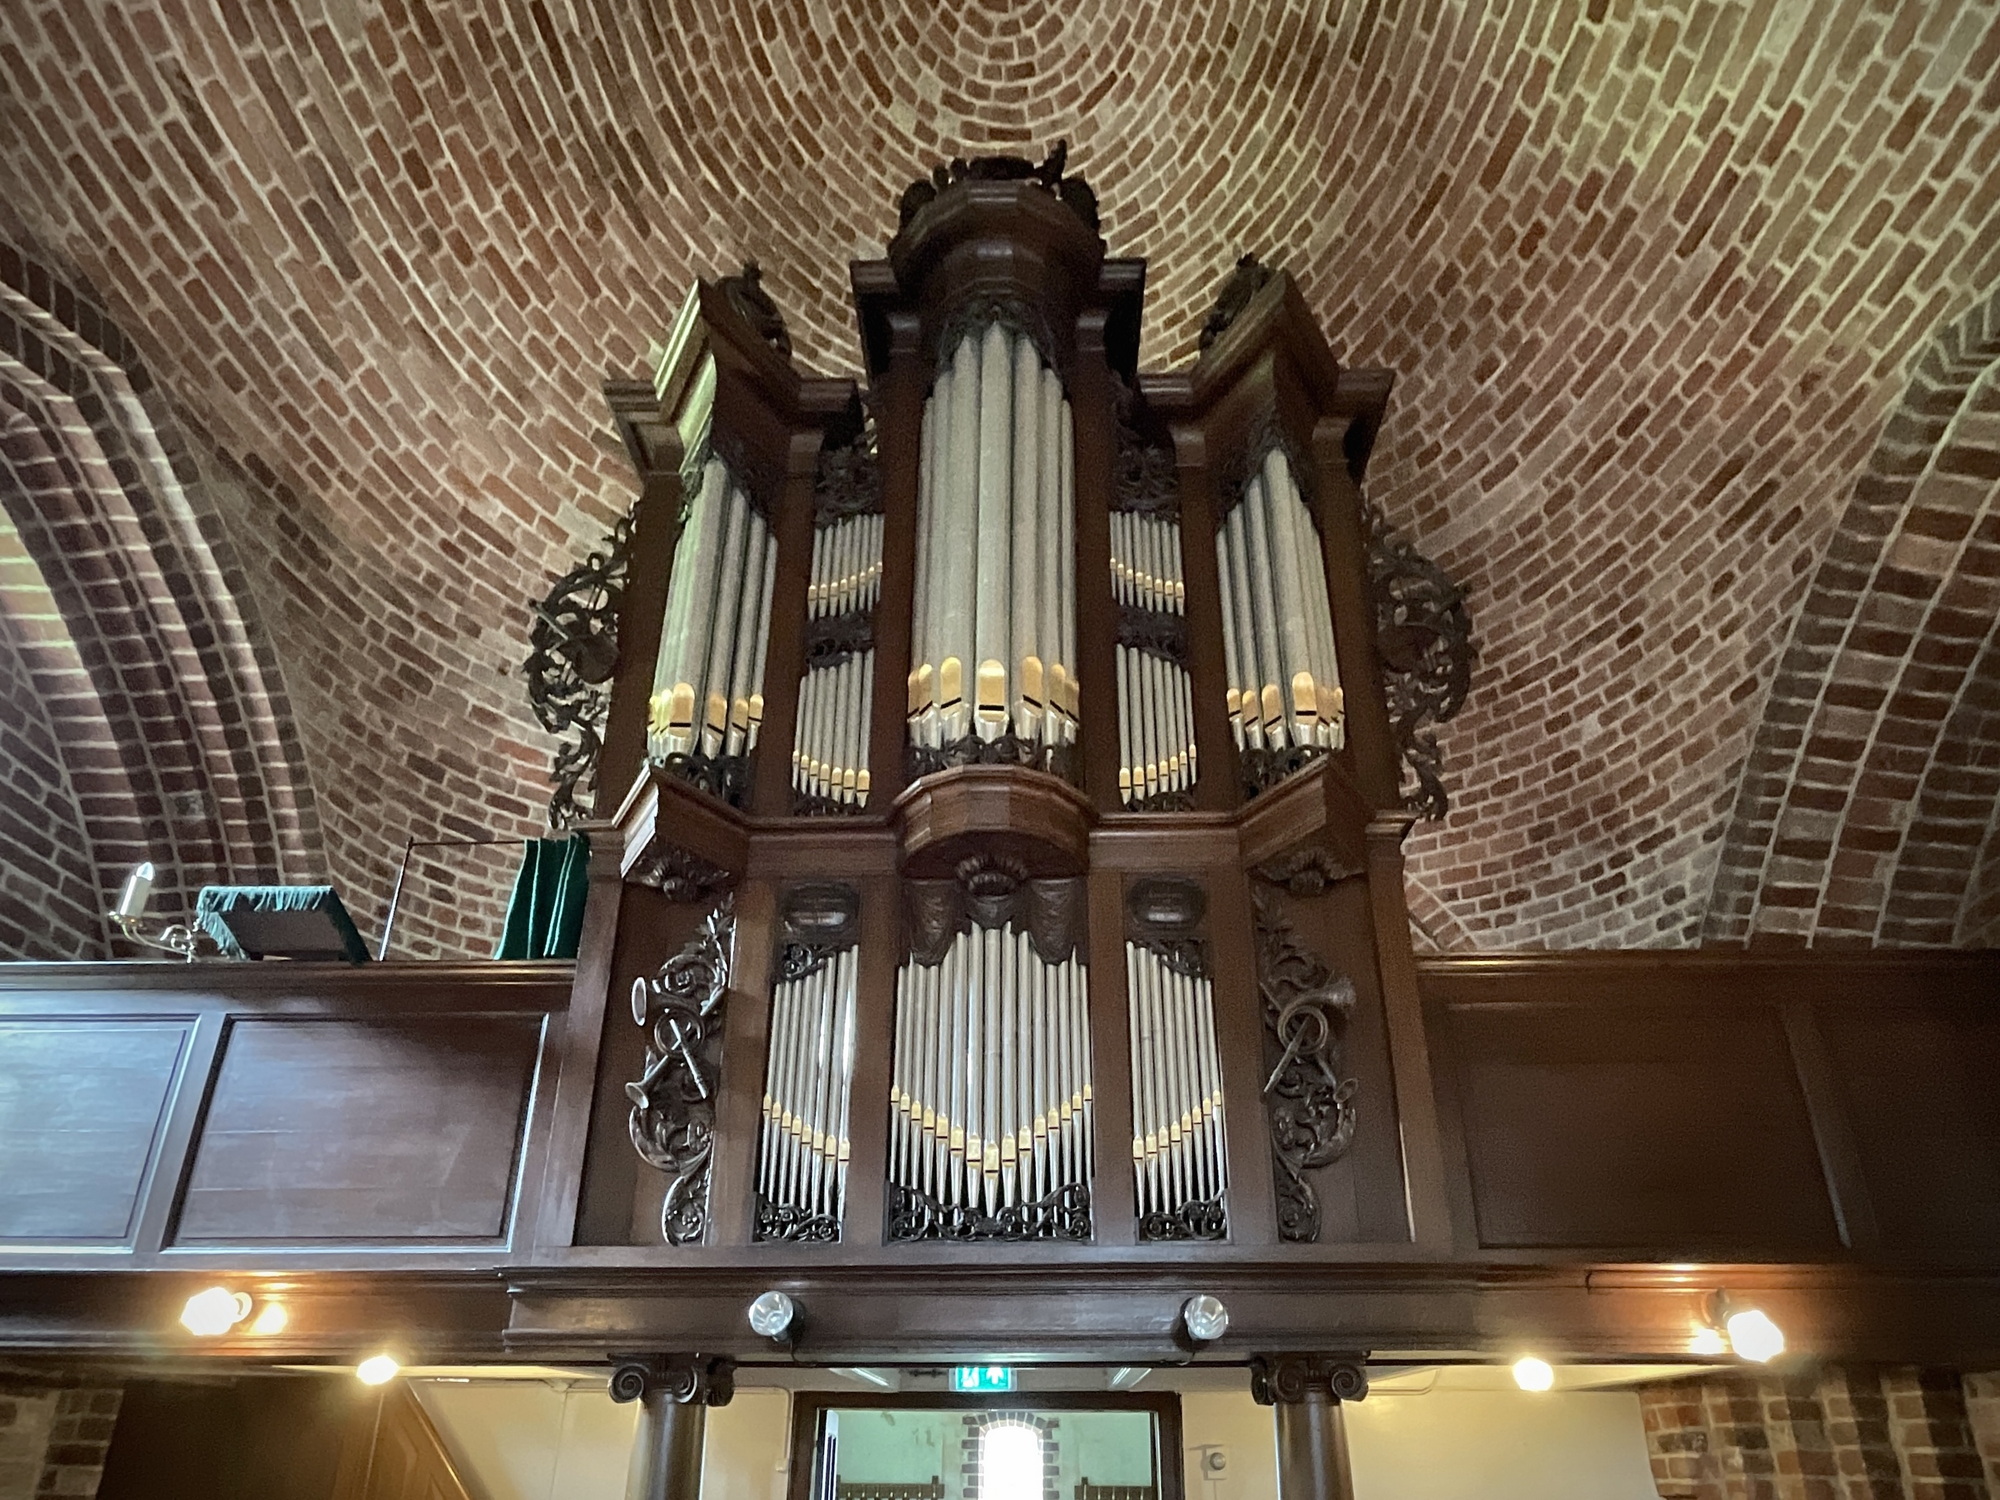 Het orgel in de kerk van Ulrum. Foto: Jur Kuipers, 2021.